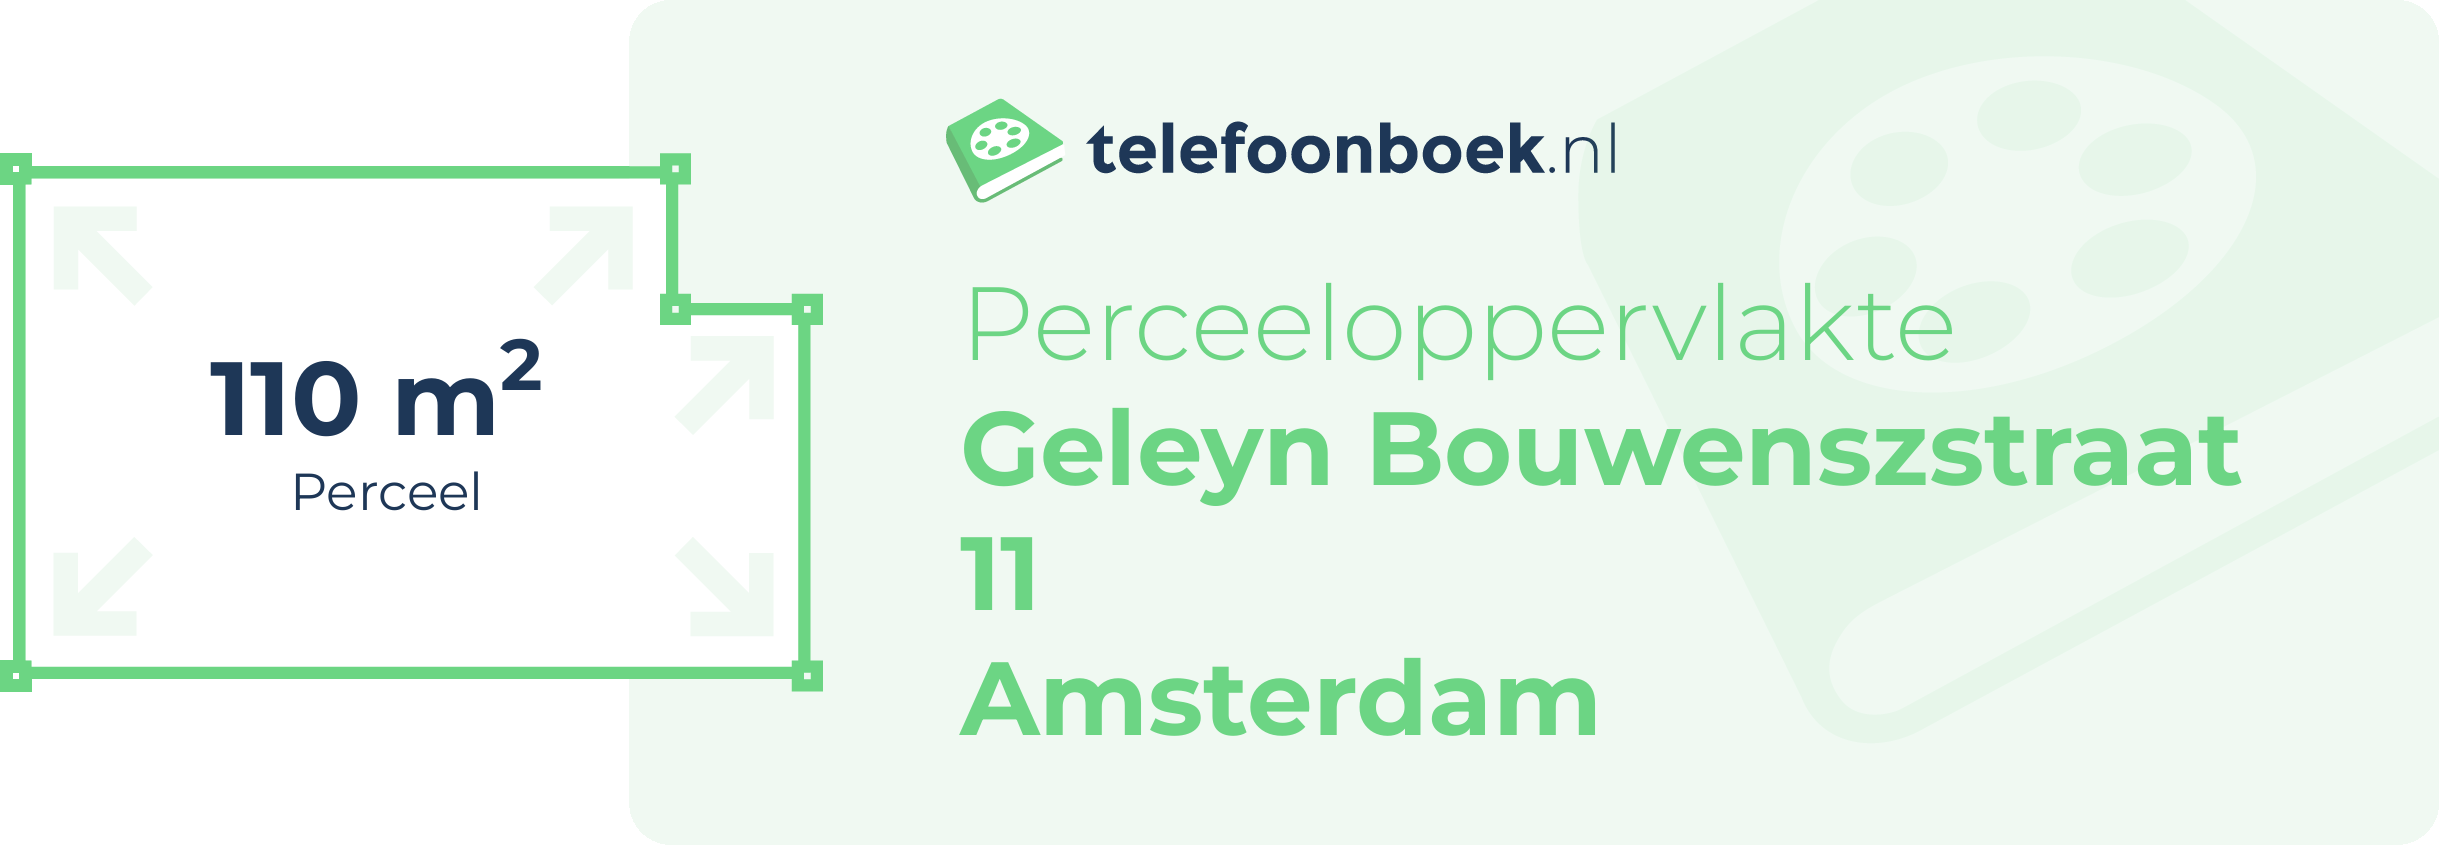 Perceeloppervlakte Geleyn Bouwenszstraat 11 Amsterdam